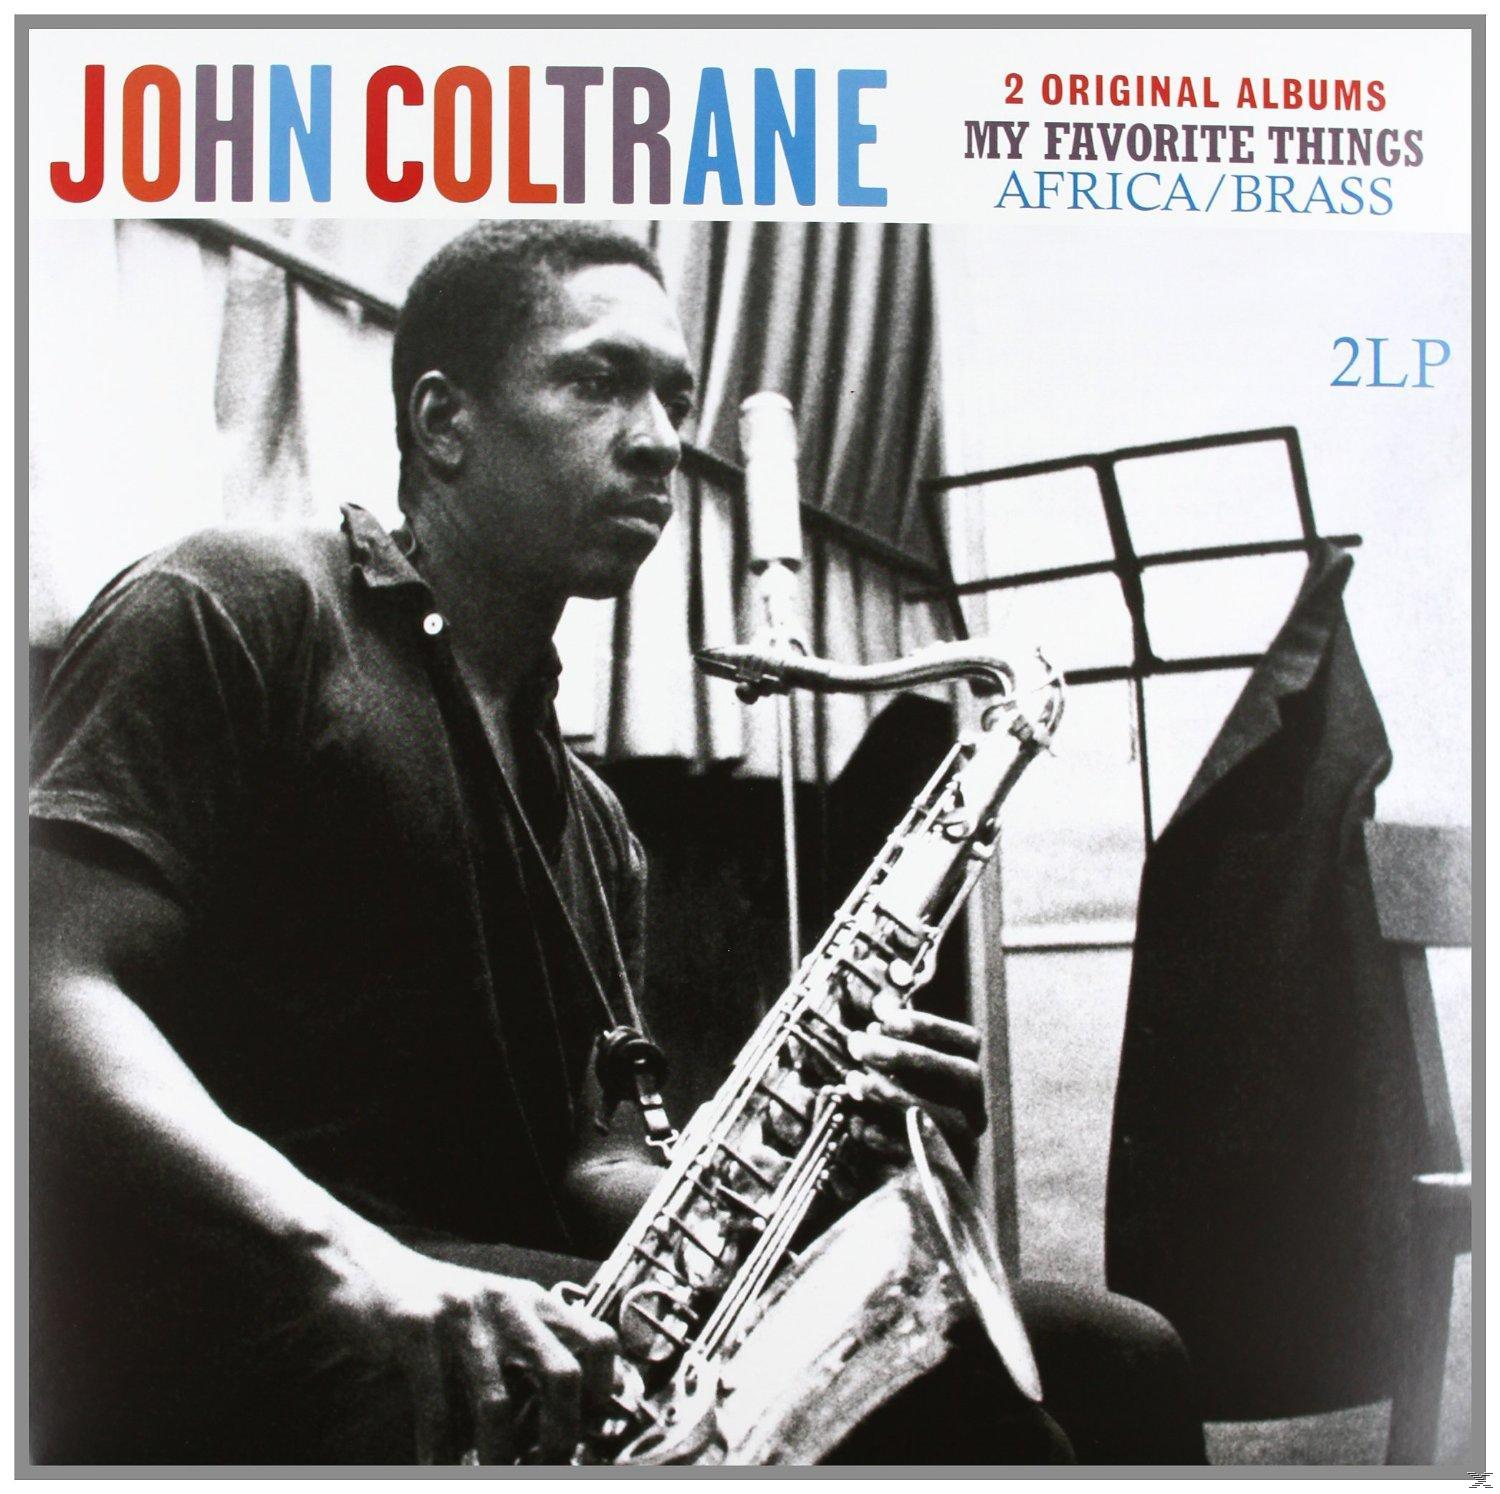 - Things+Africa/Brass - John Favorite My Coltrane (Vinyl)